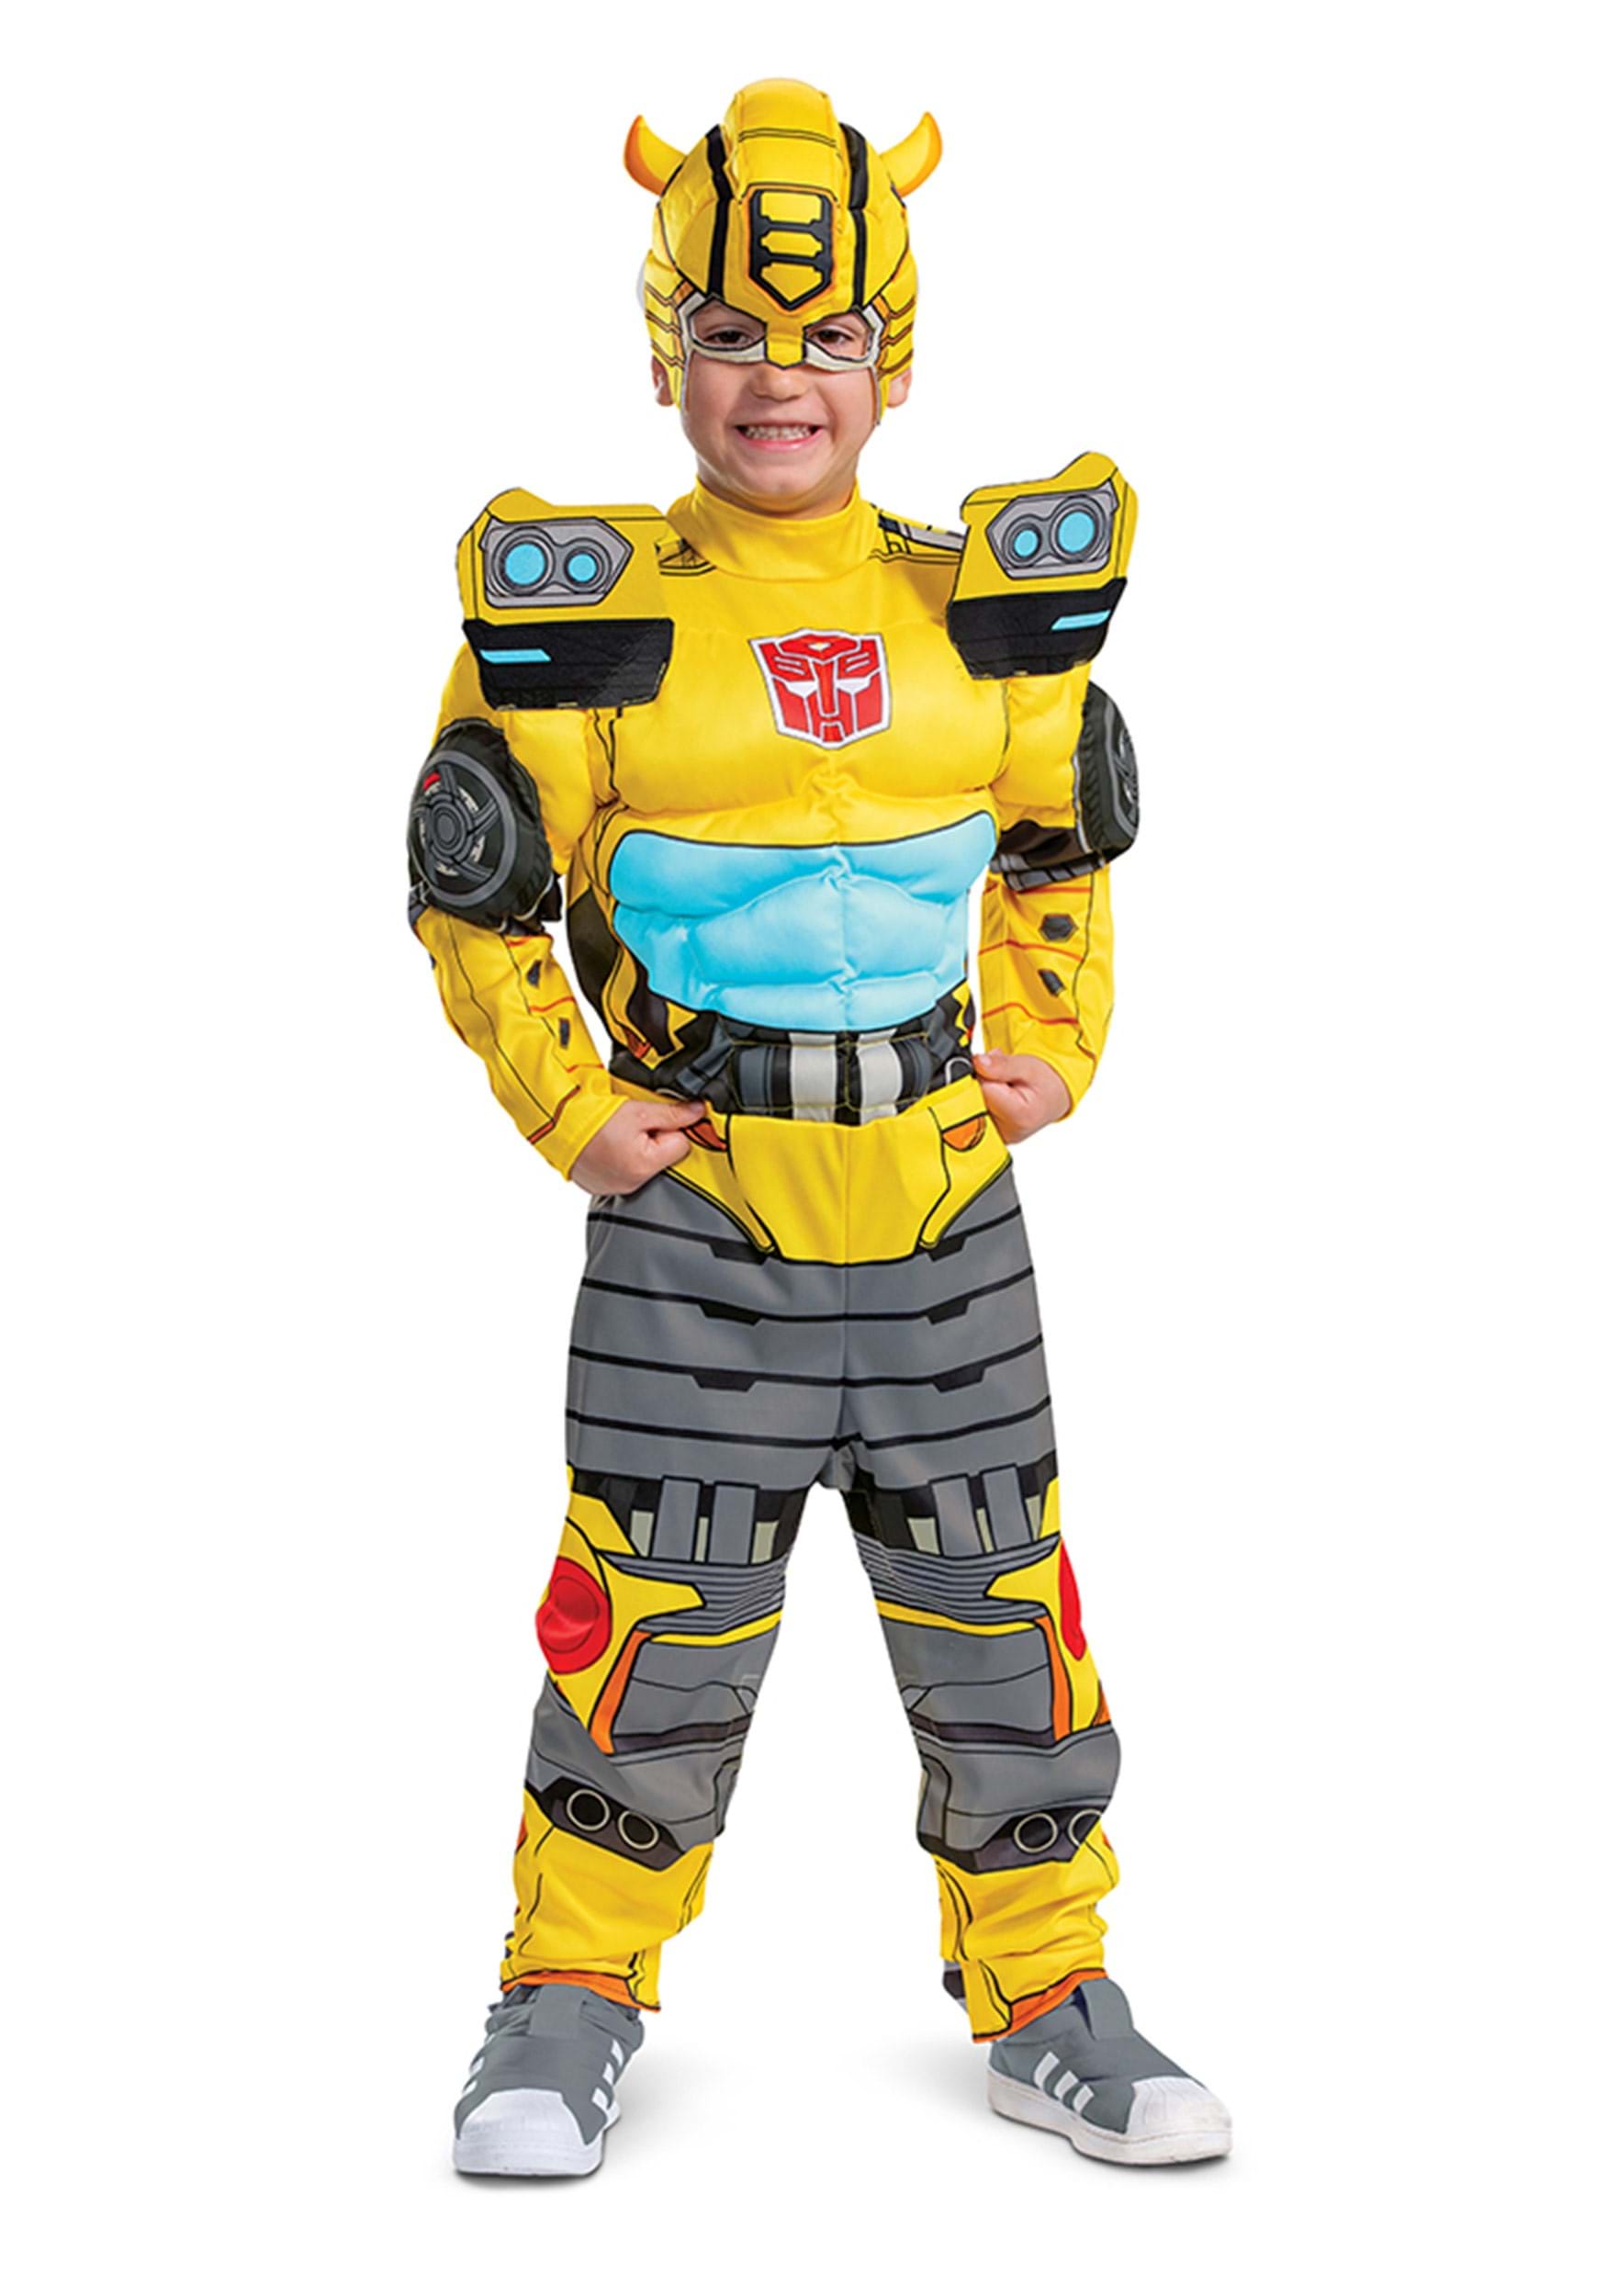 Image of Transformers Bumblebee Adaptive Costume for Kids ID DI120559-7/8